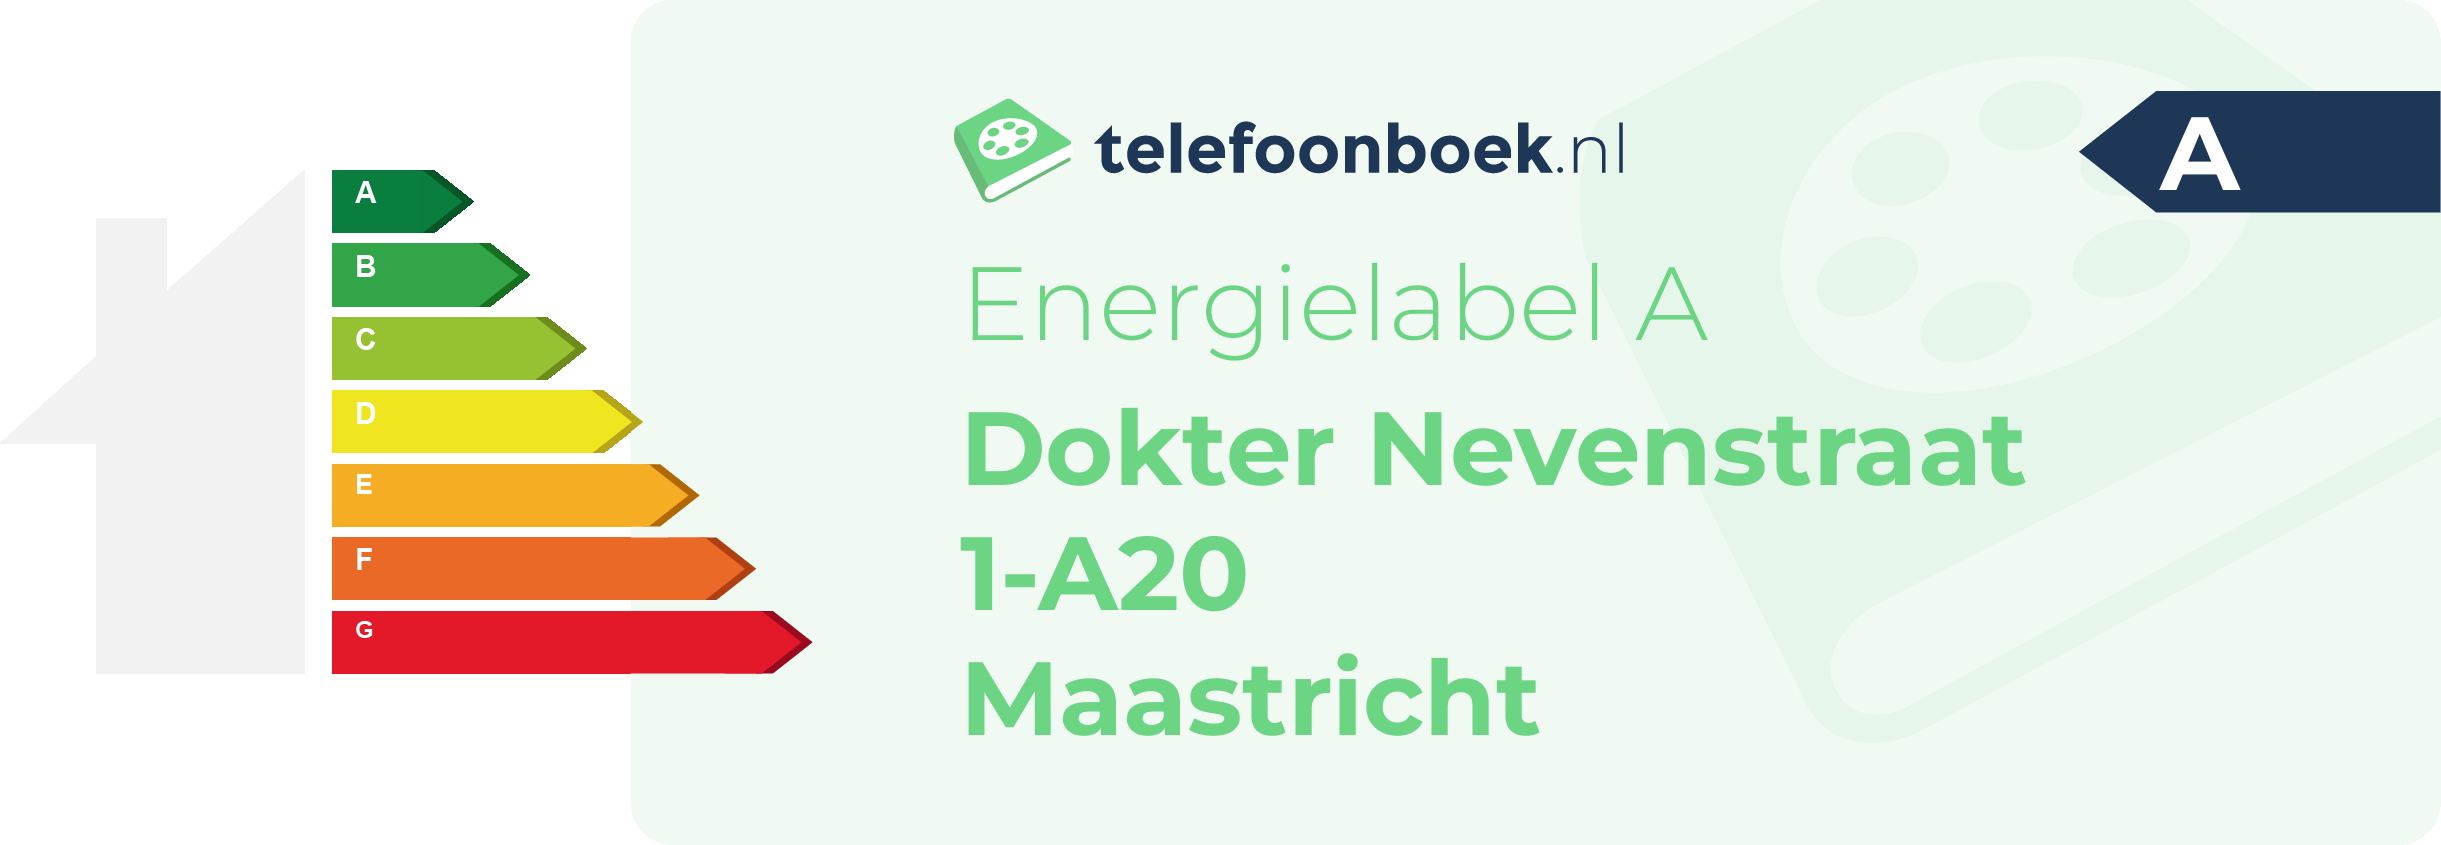 Energielabel Dokter Nevenstraat 1-A20 Maastricht